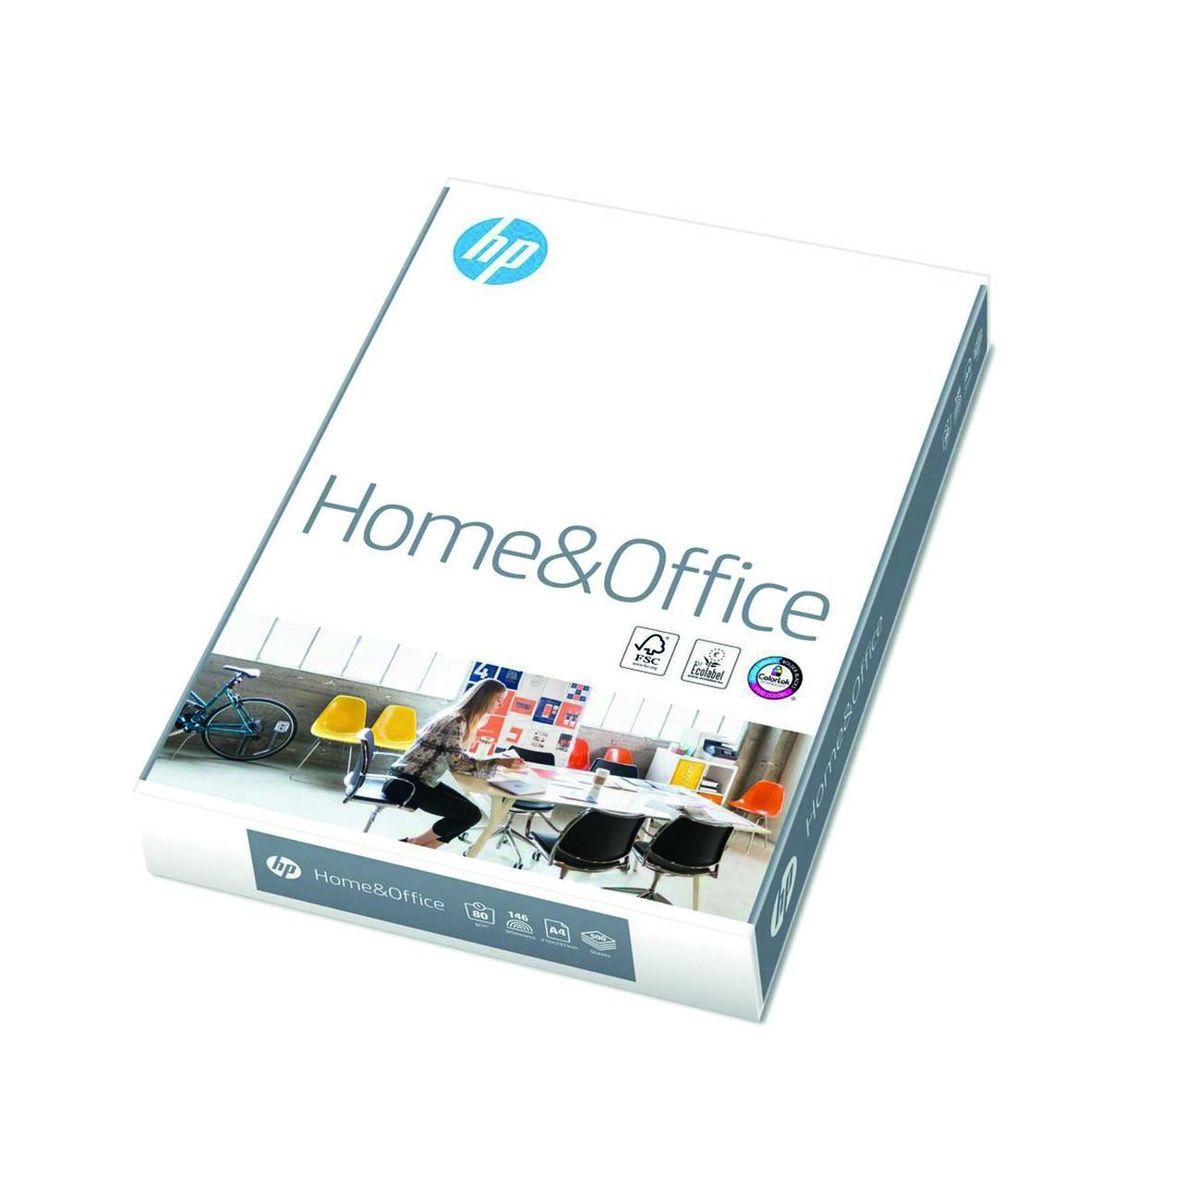 Papier universel HP Home & Office, A4, 80 g/m², 500 feuilles